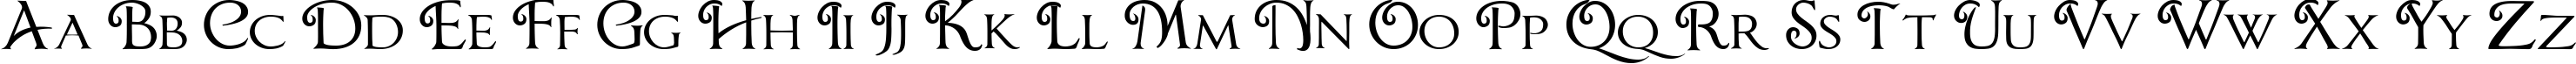 Пример написания английского алфавита шрифтом ChocolateBox